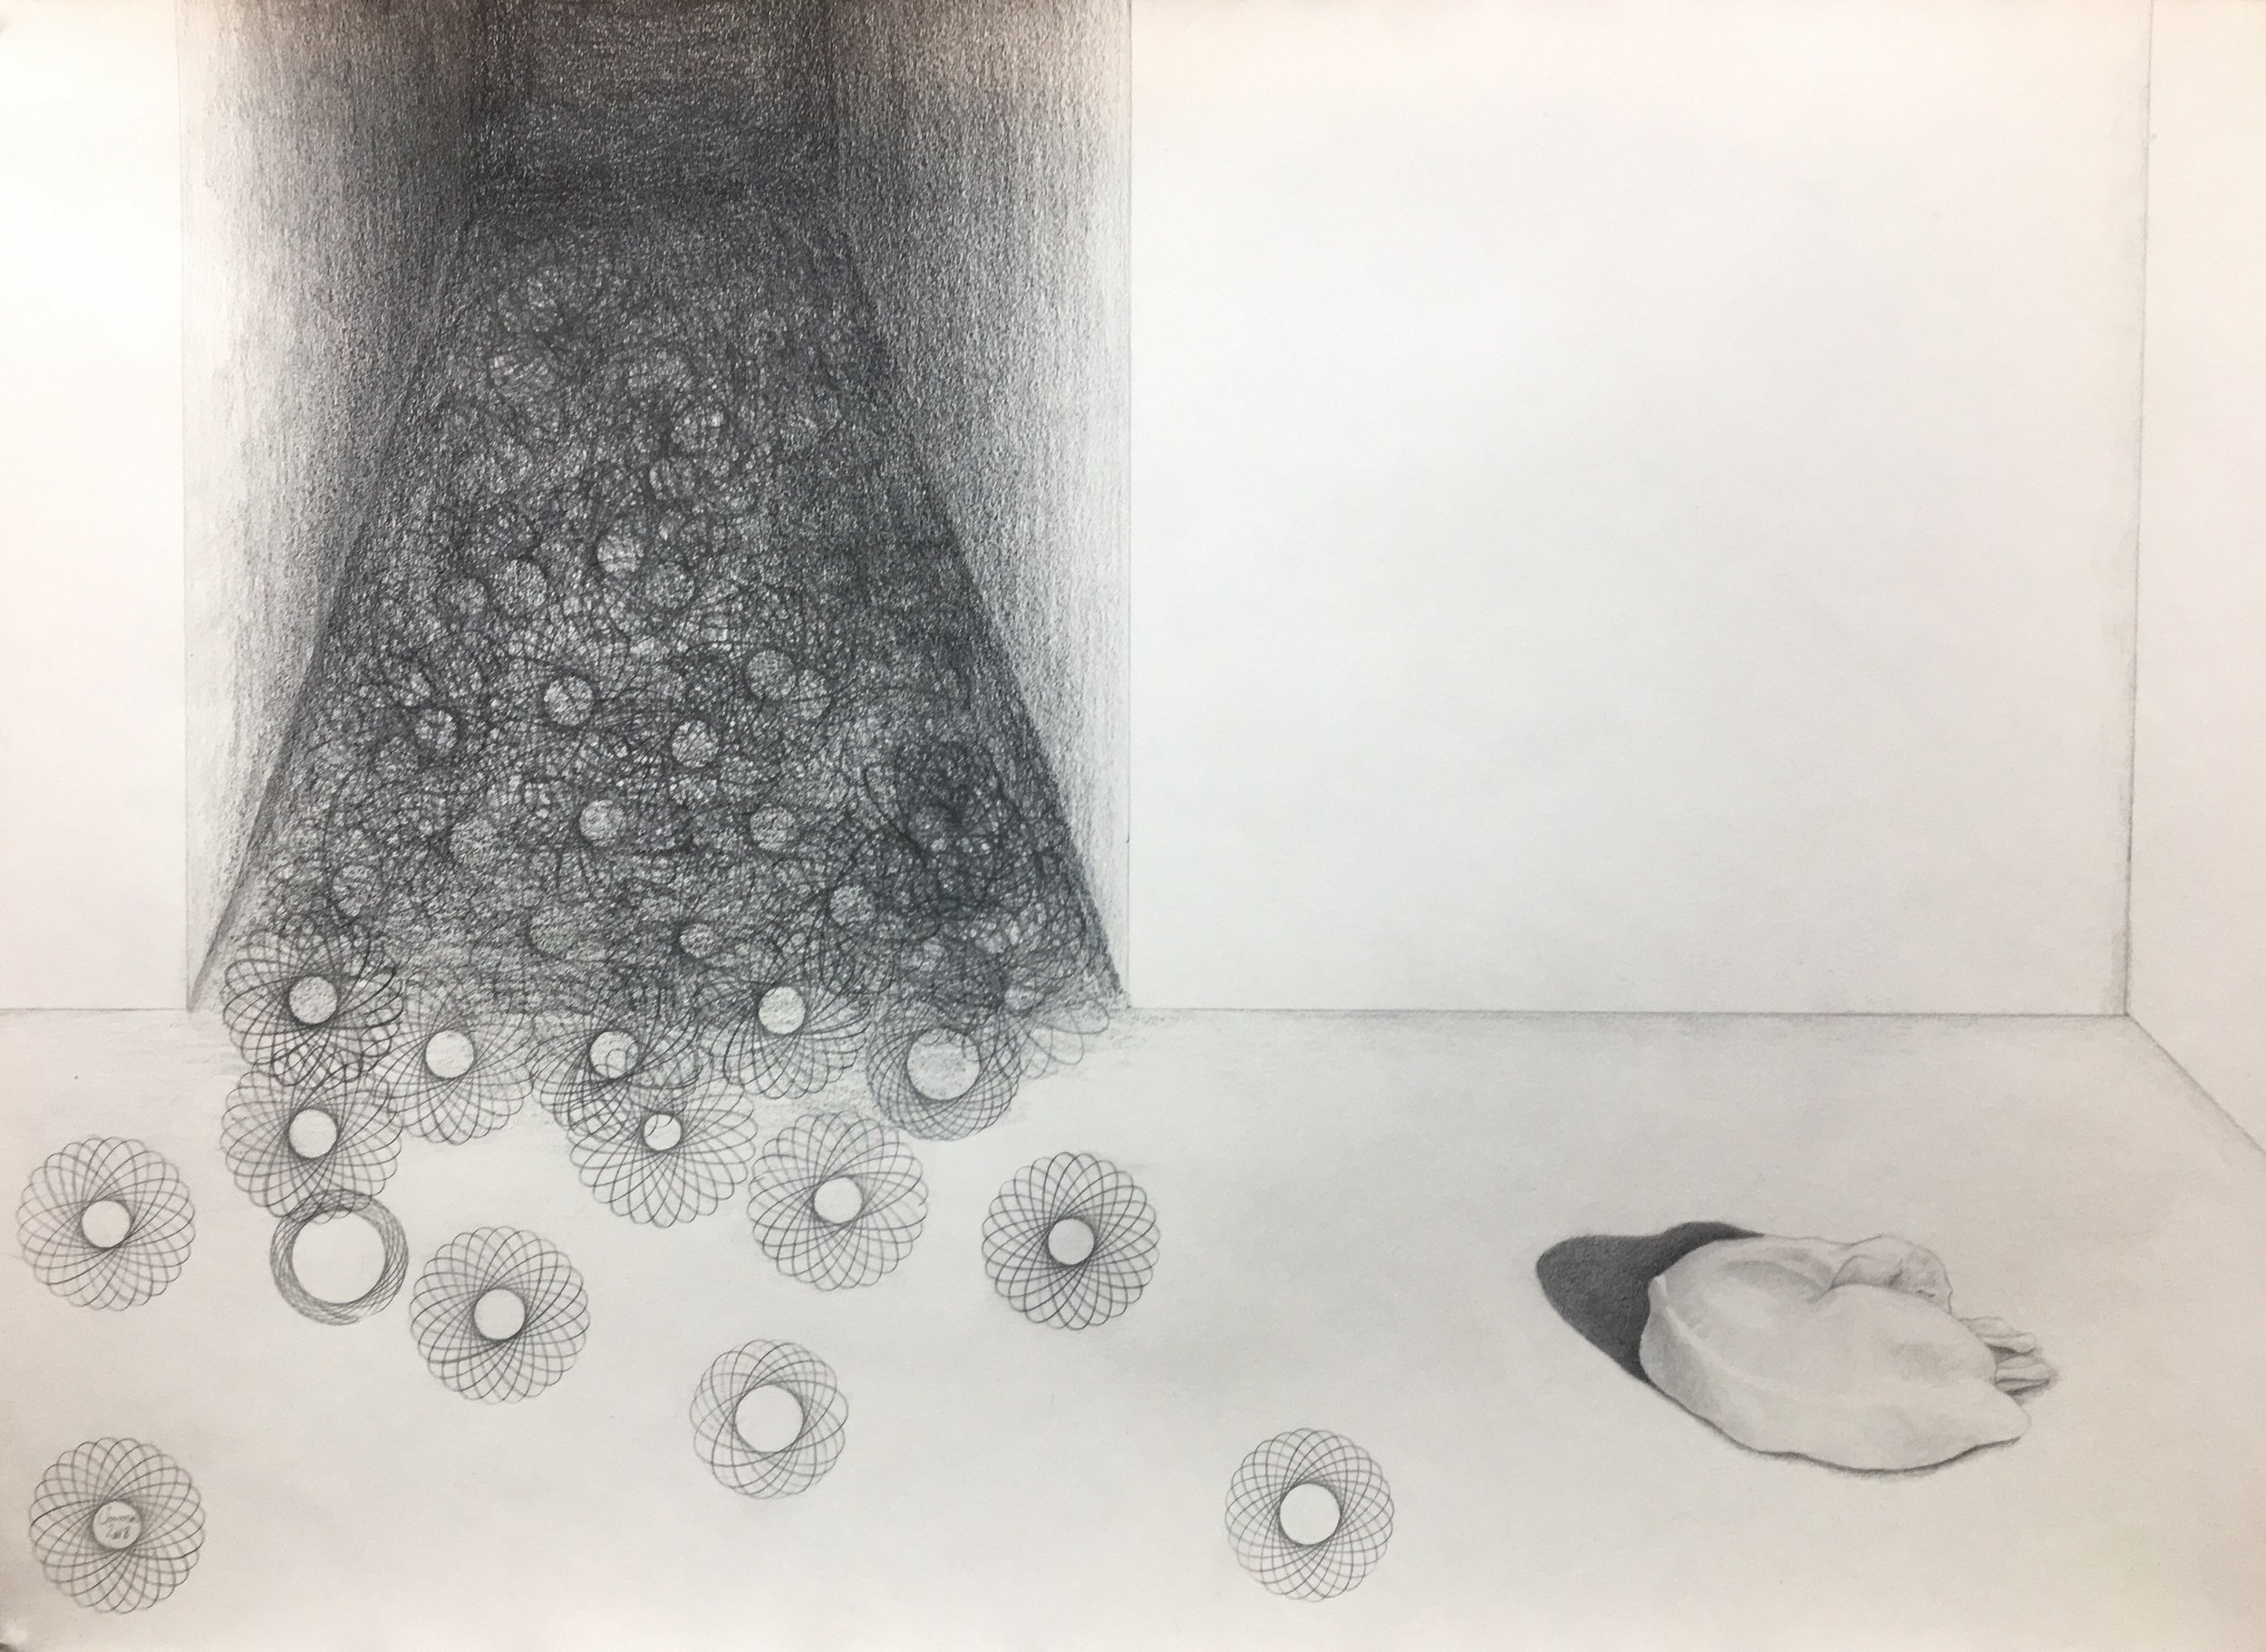  Darkness Sleeping Through, pencil on paper, 42 x 59 cm, 2018 